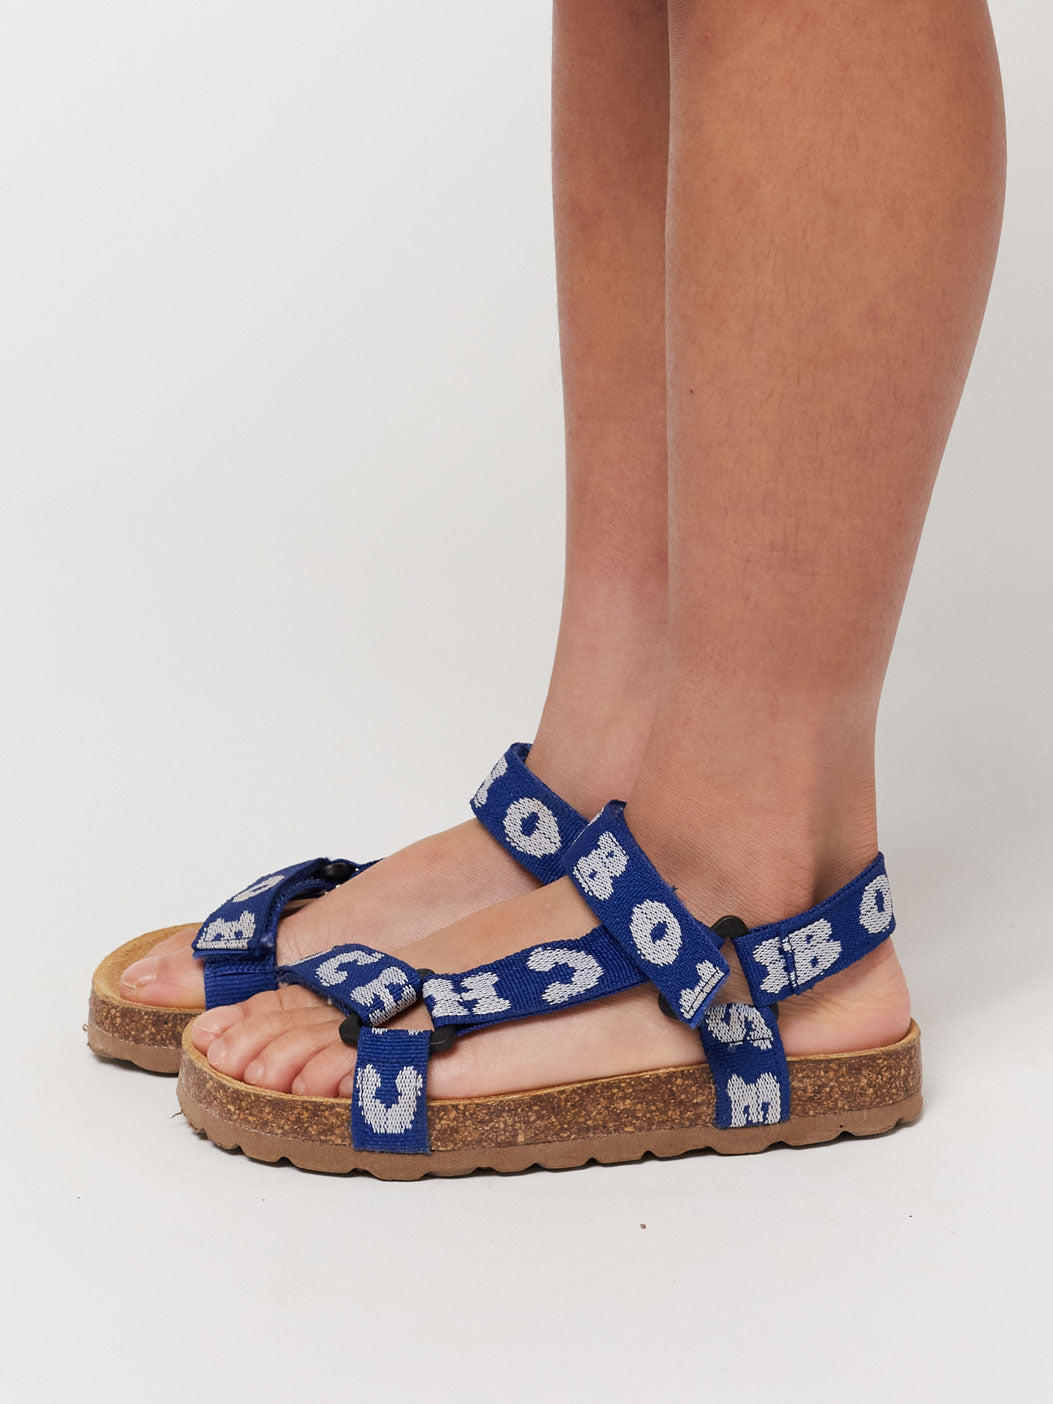 Bobo Choses printed blue sandals